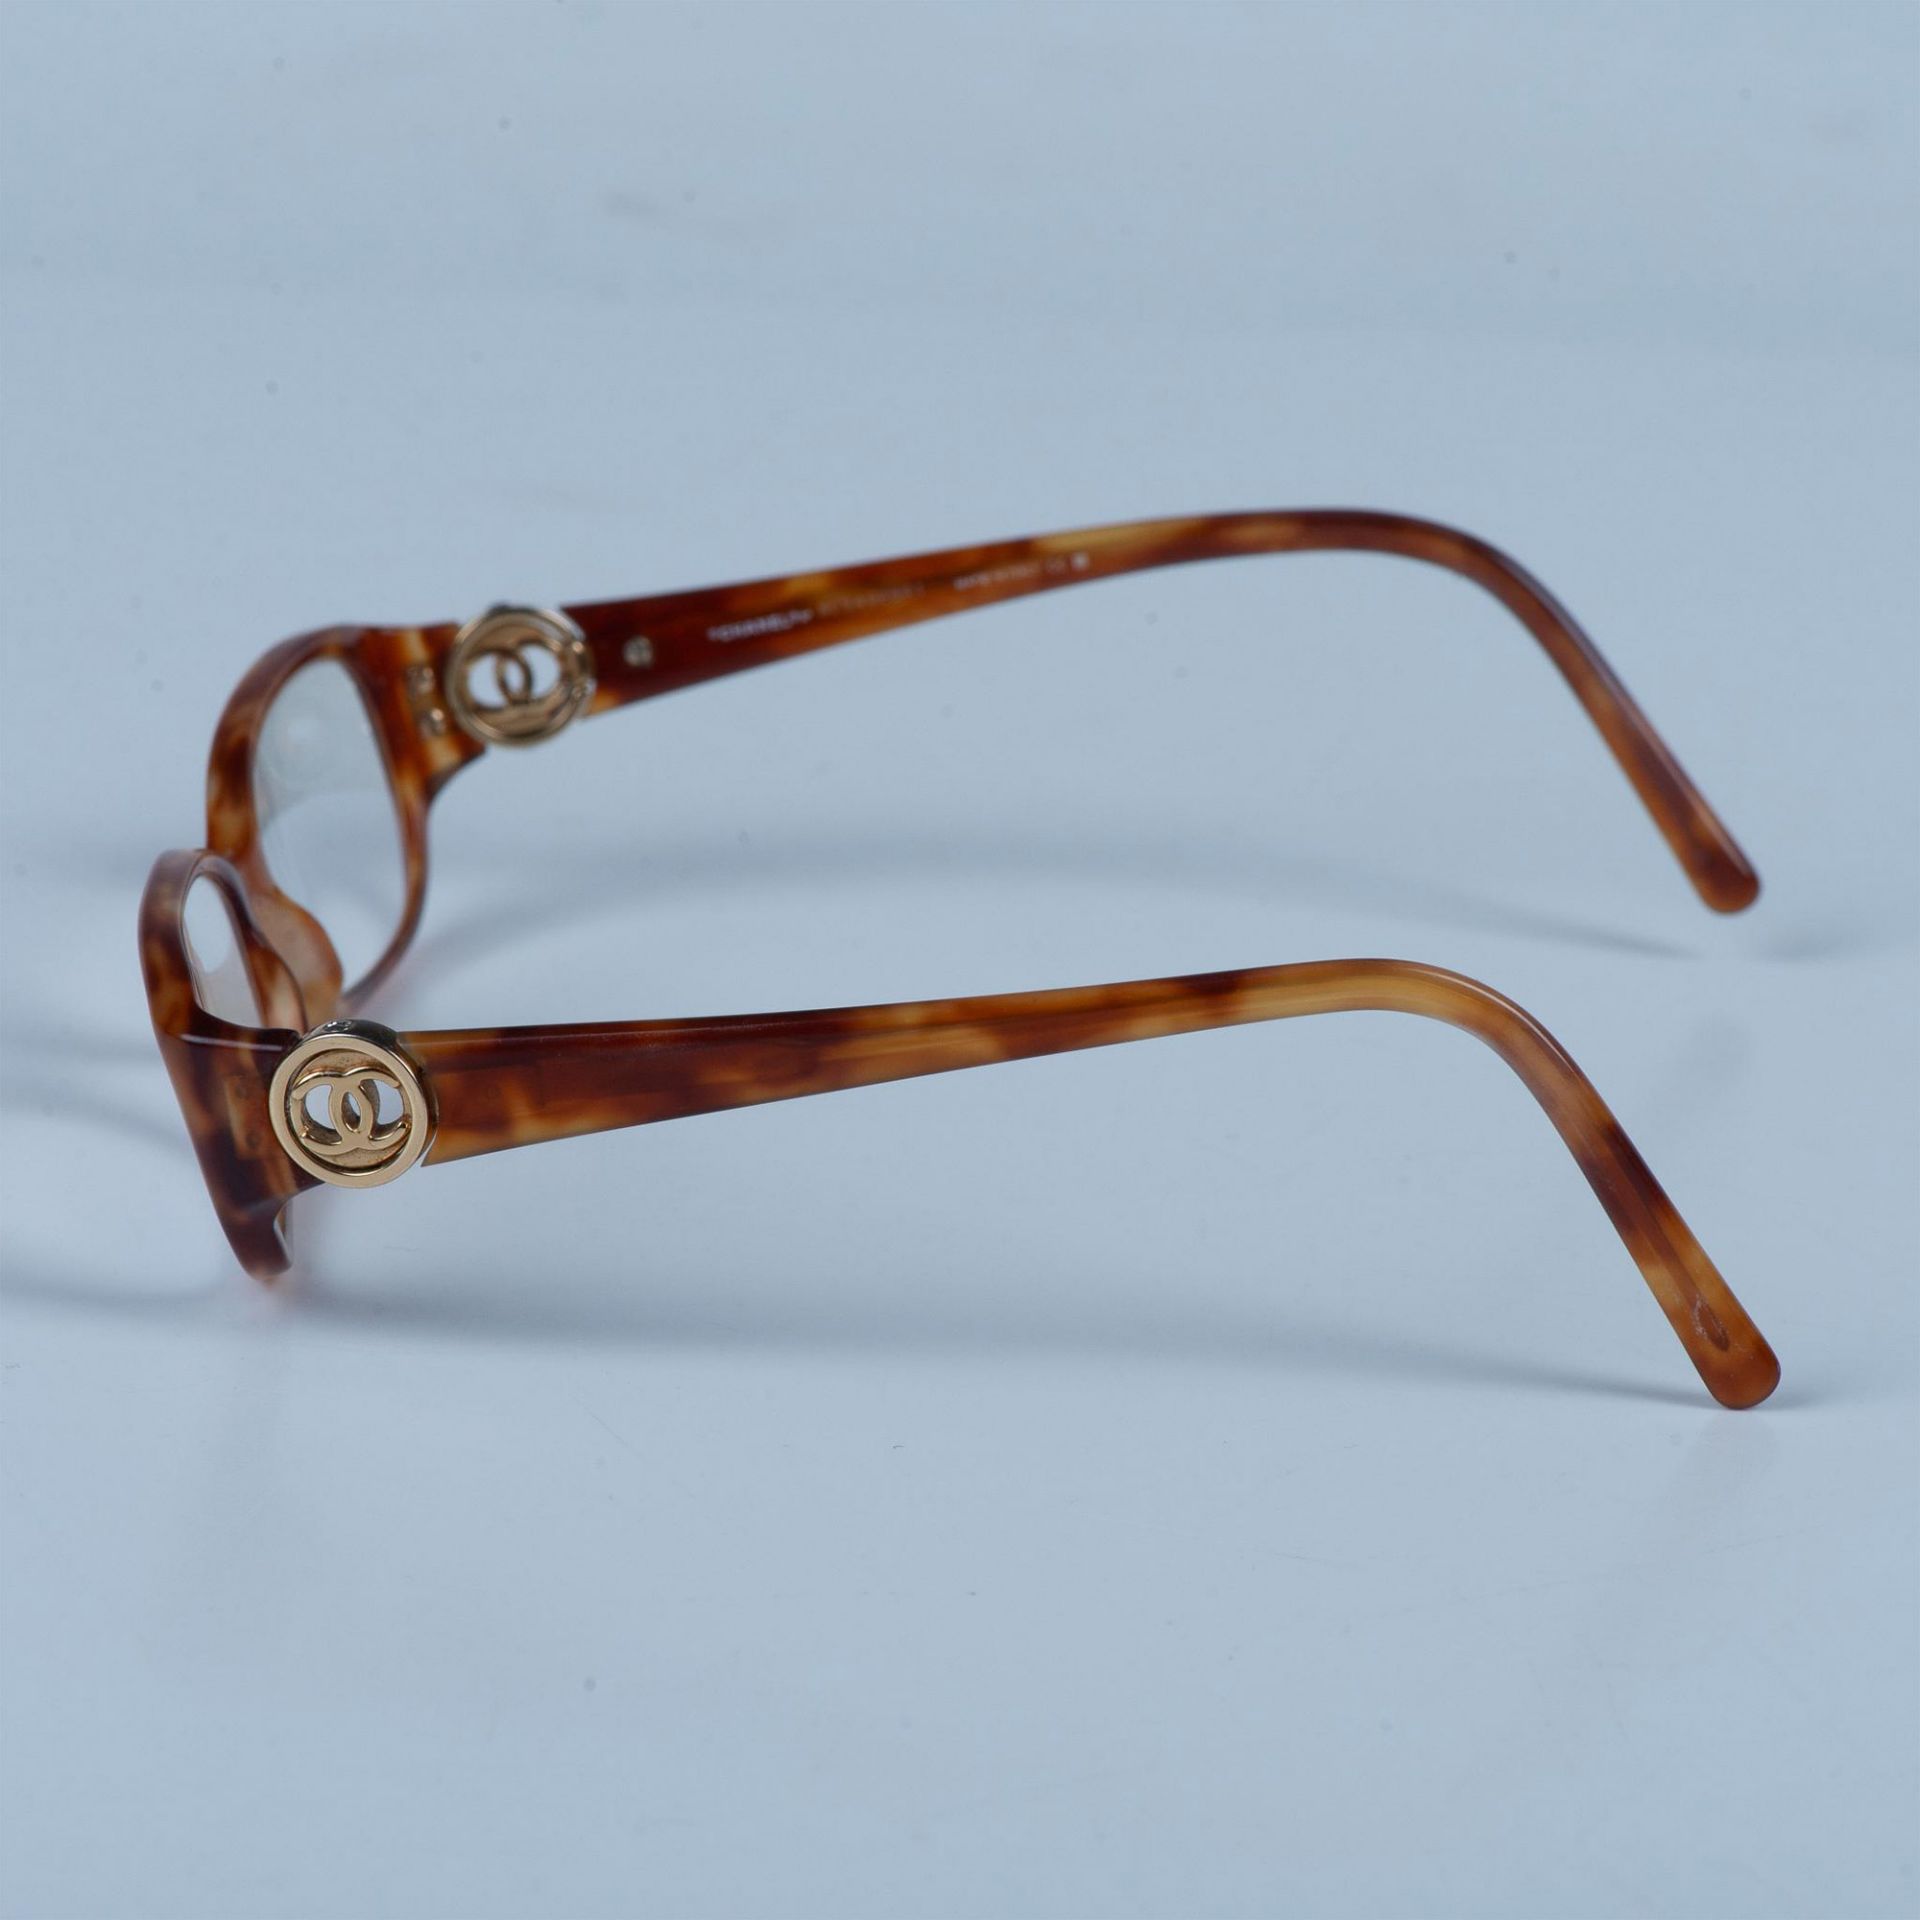 Chanel Eyeglass Frame - Image 2 of 8